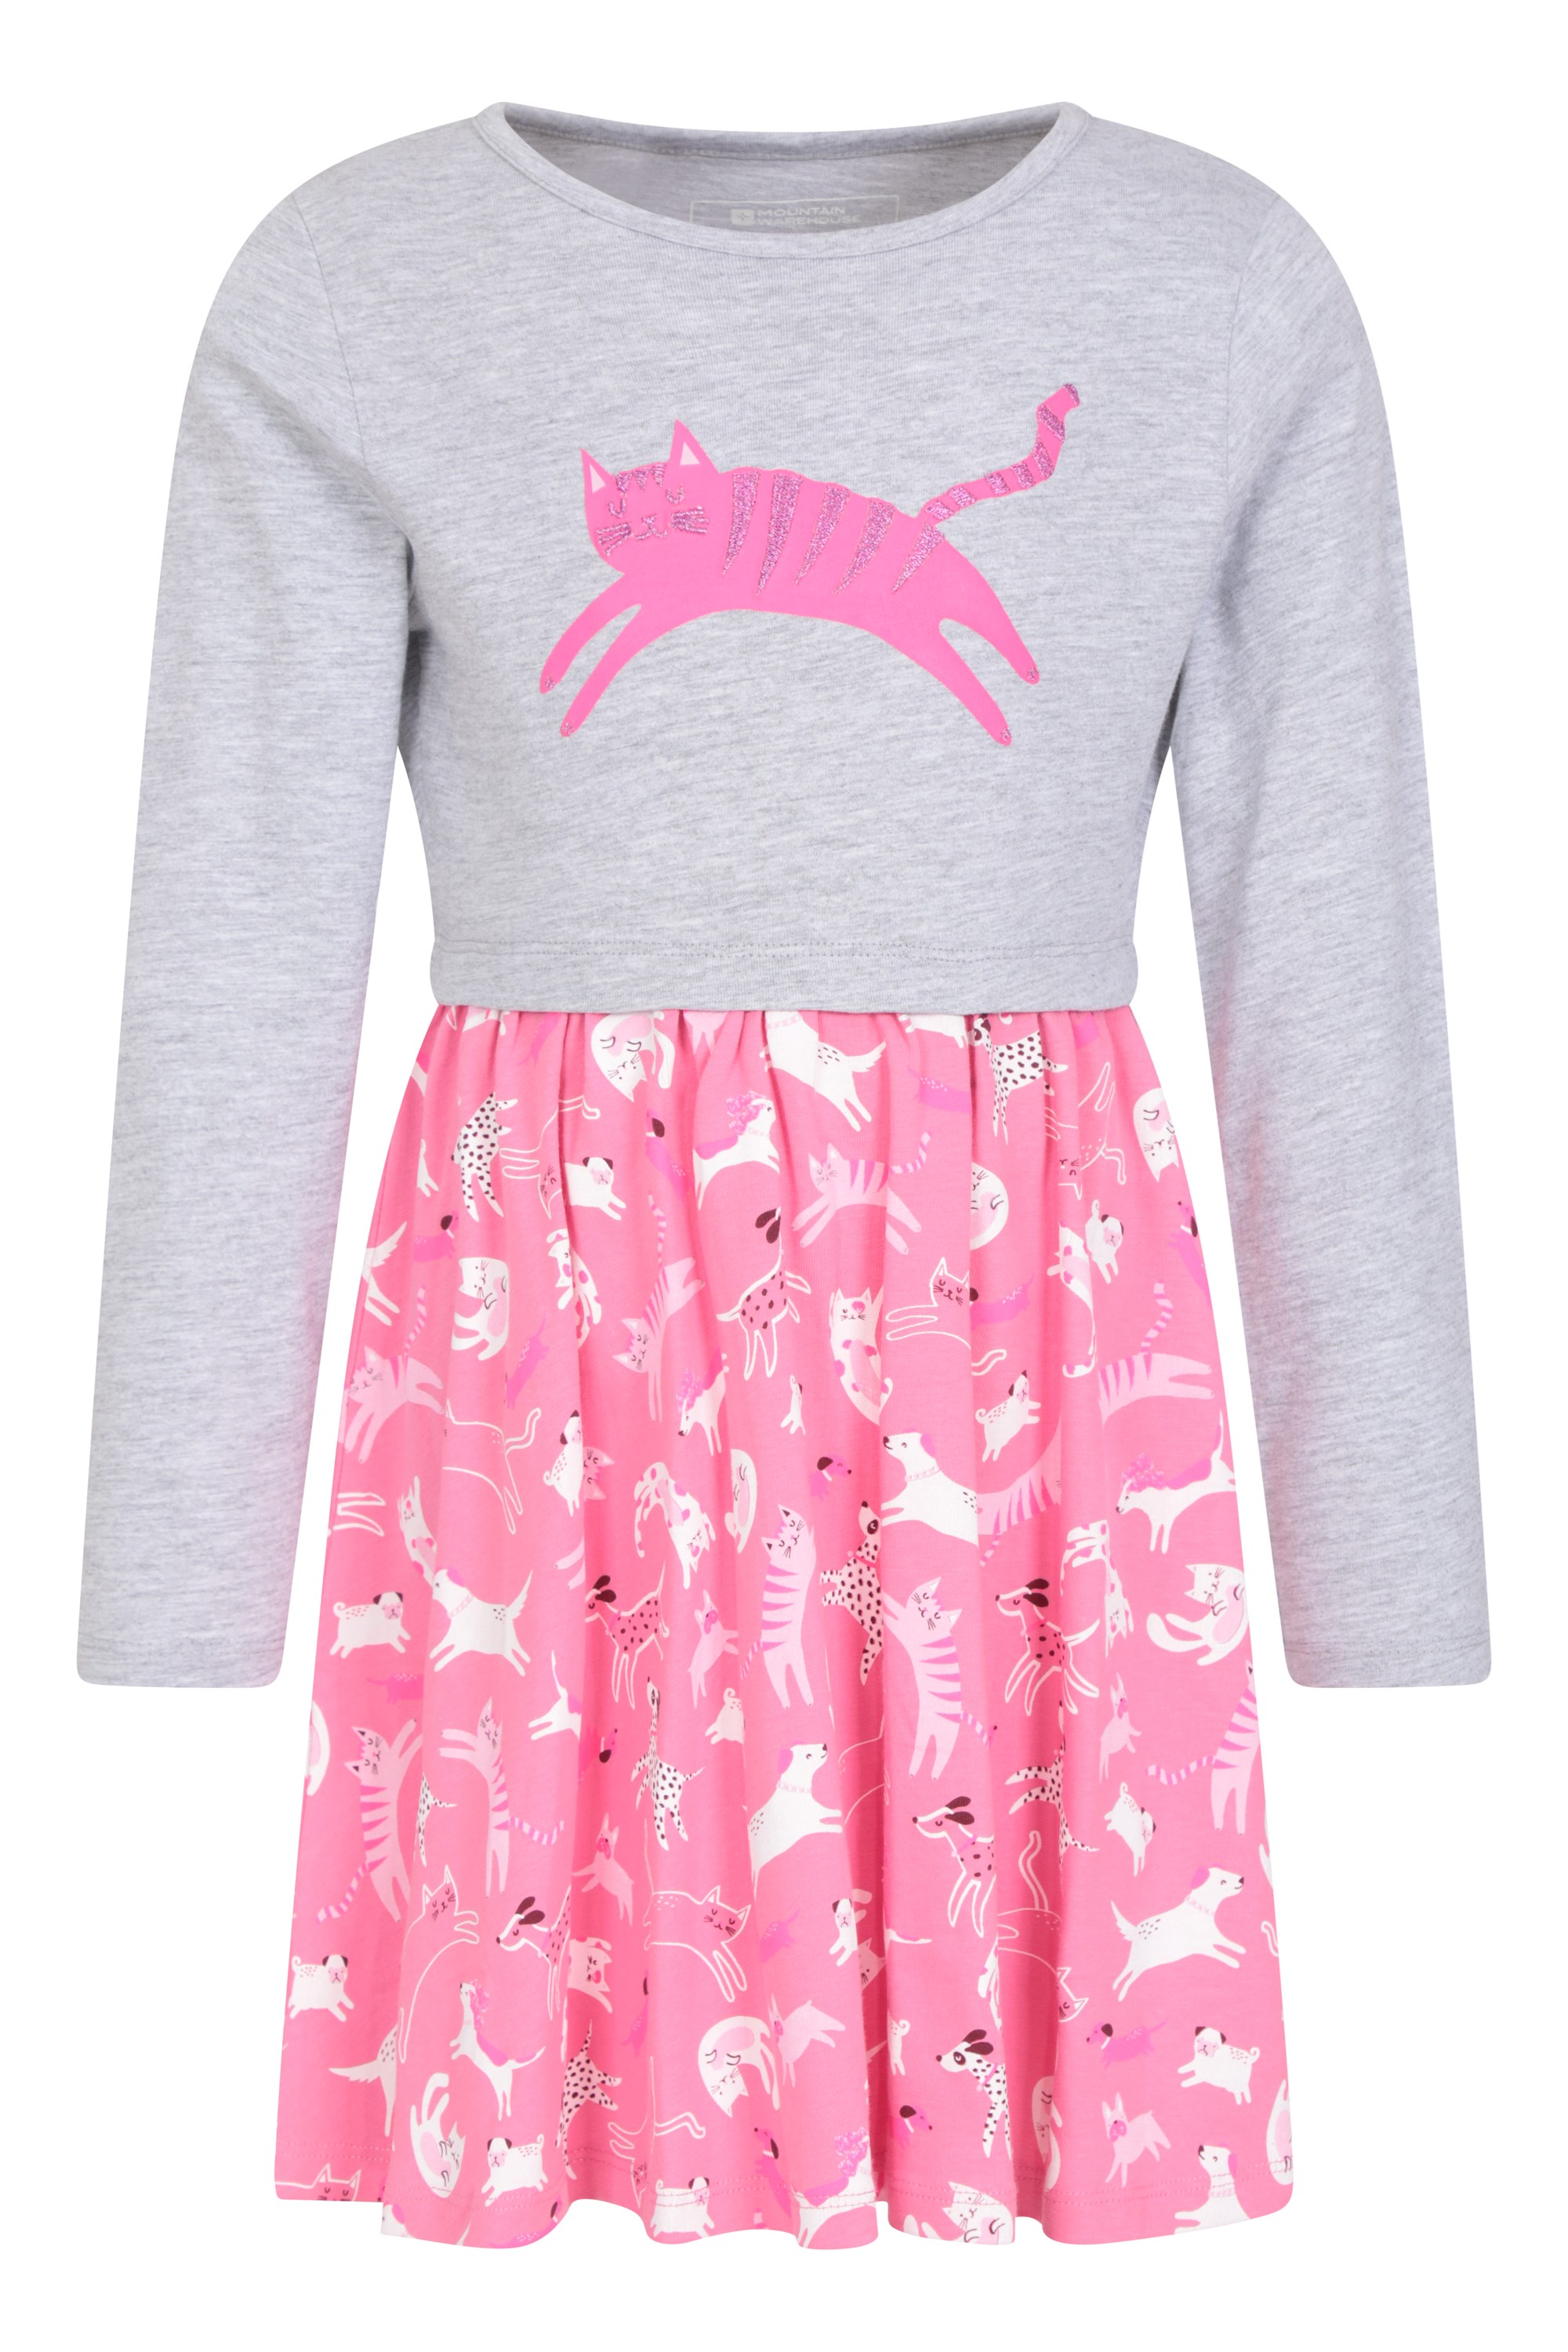 Poppy Kids Organic Long Sleeve Dress - Pink